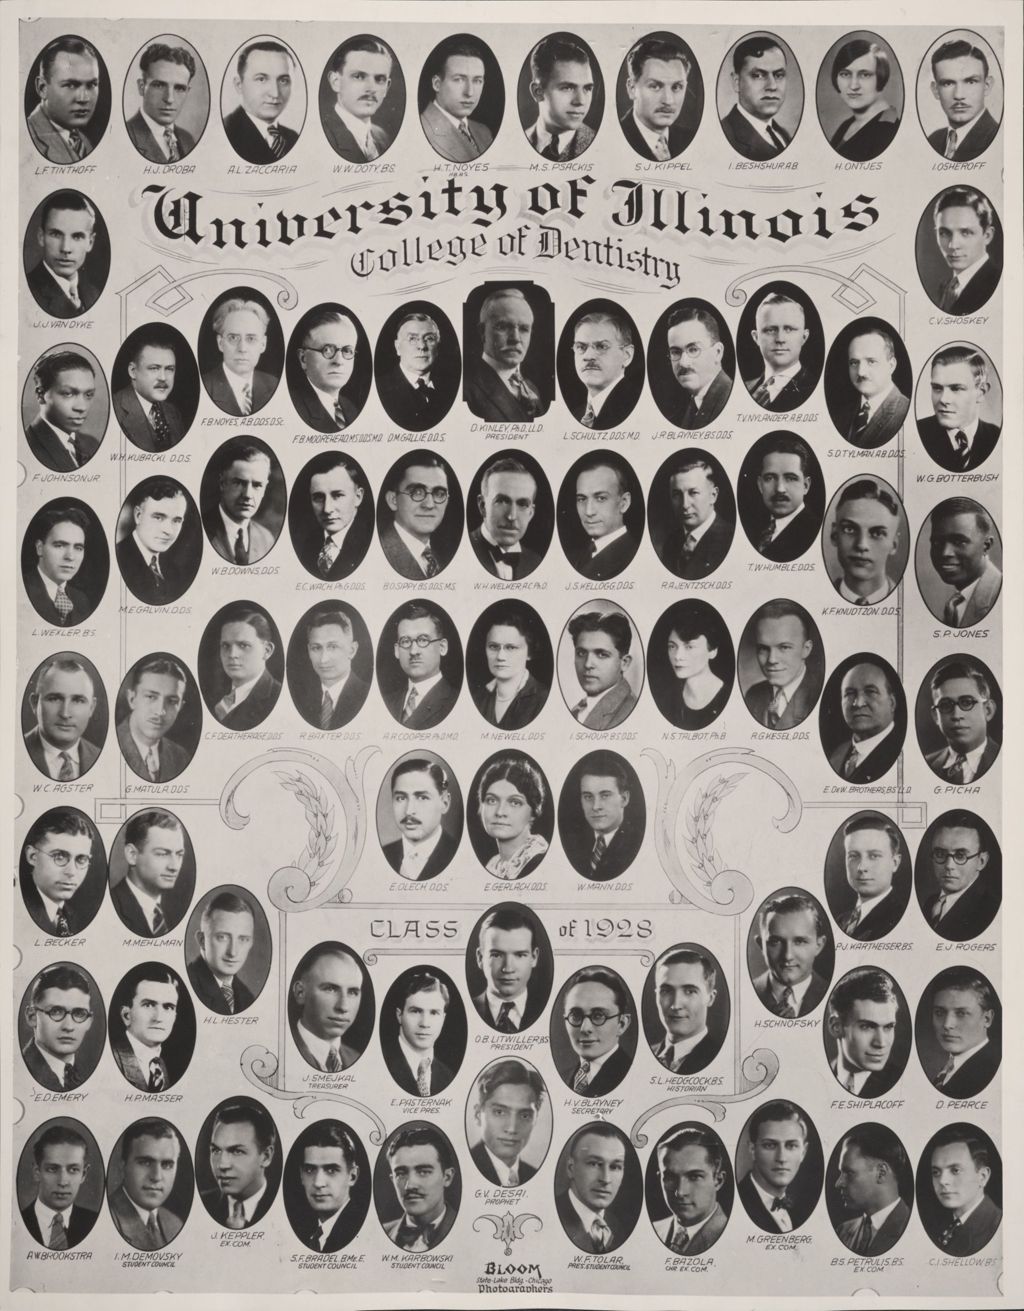 Miniature of 1928 graduating class, University of Illinois College of Dentistry